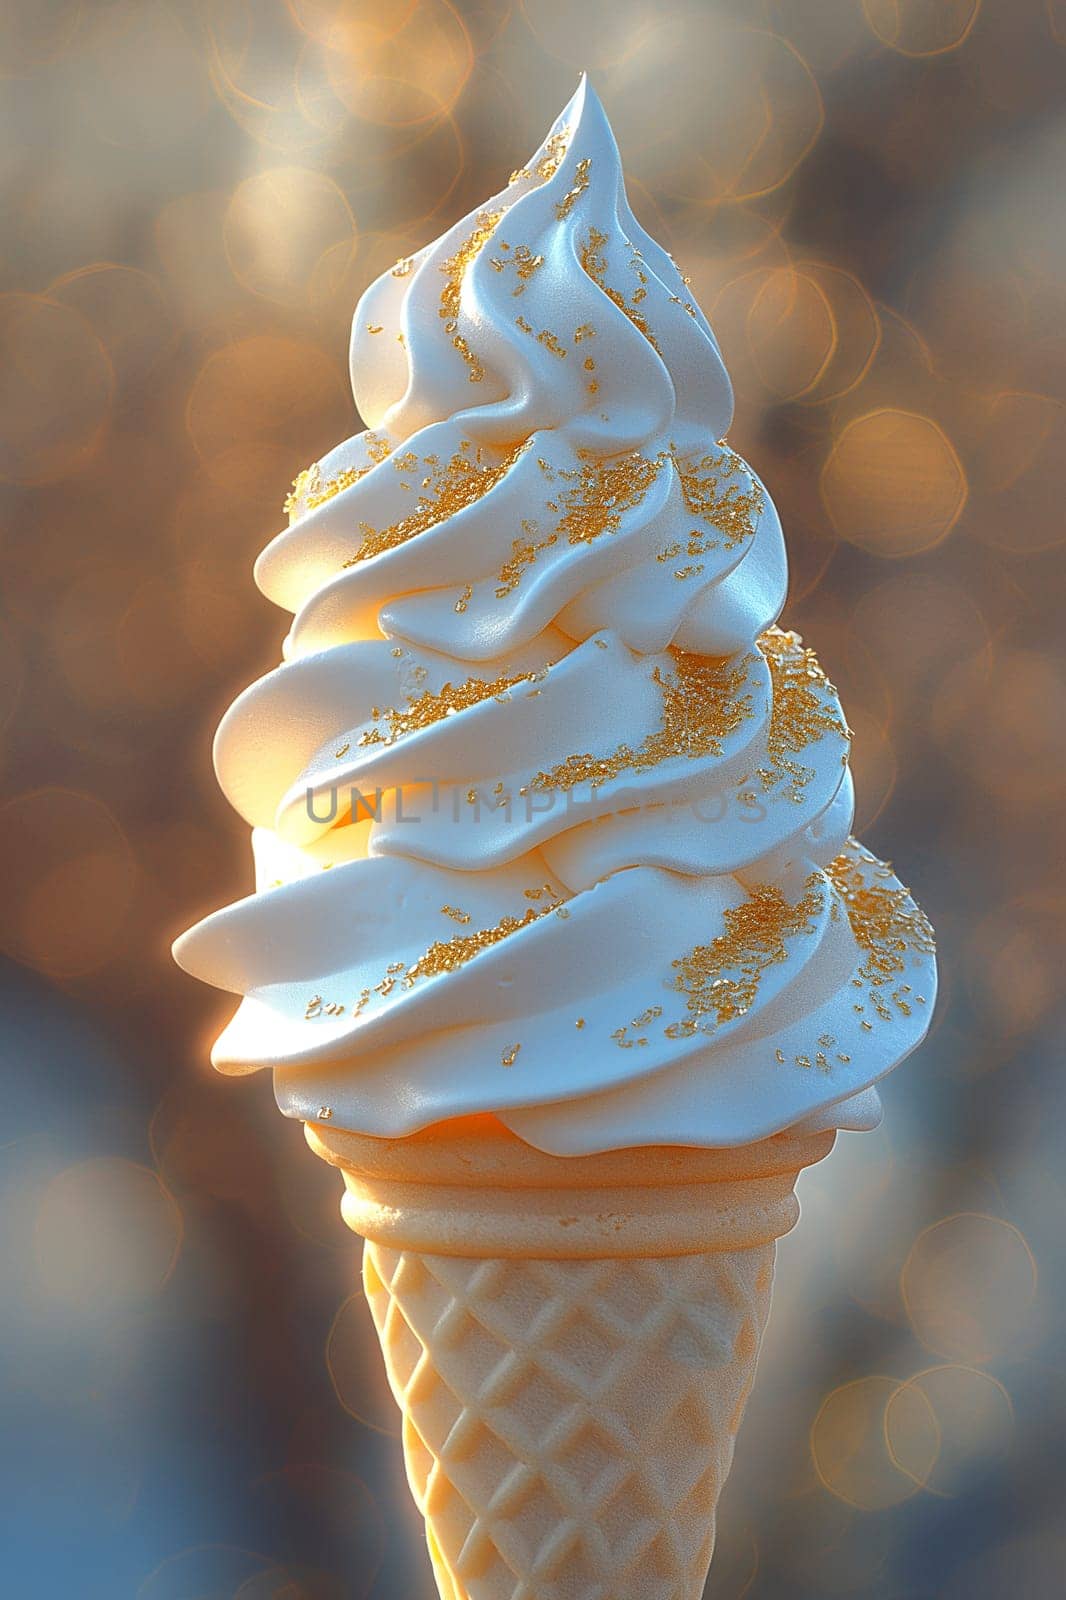 A single scoop of vanilla ice cream on a waffle cone.